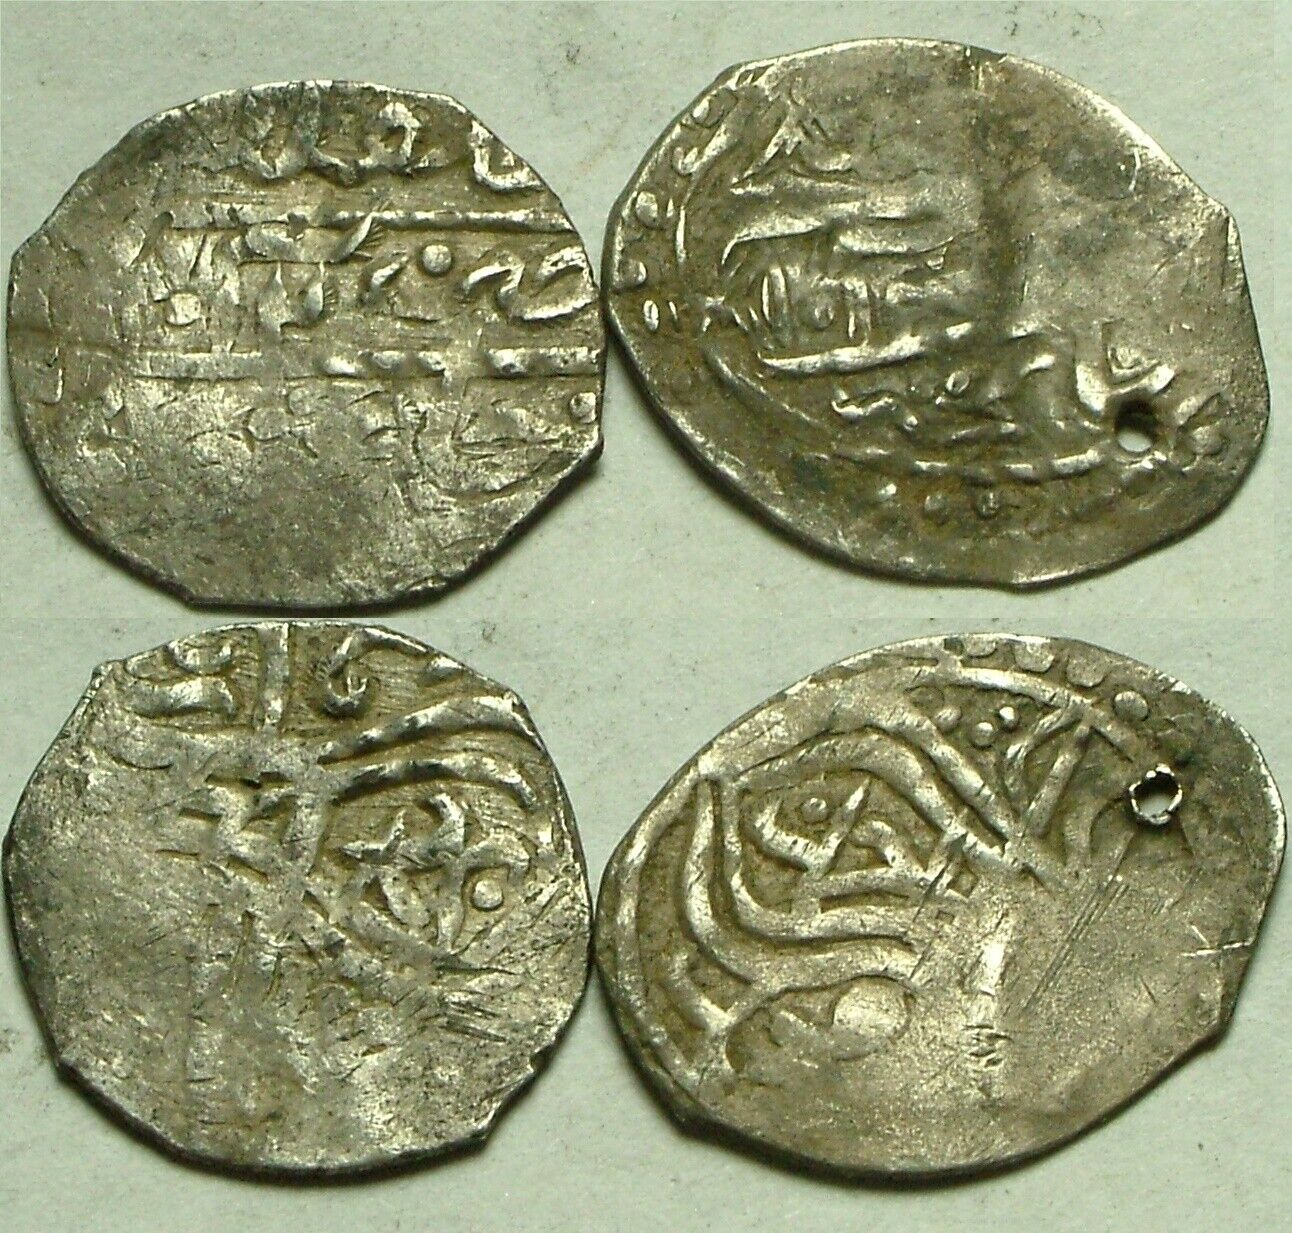 Lot 2 rare original authentic Islamic Arabic silver Dirhem coins Ottoman Empire Без бренда